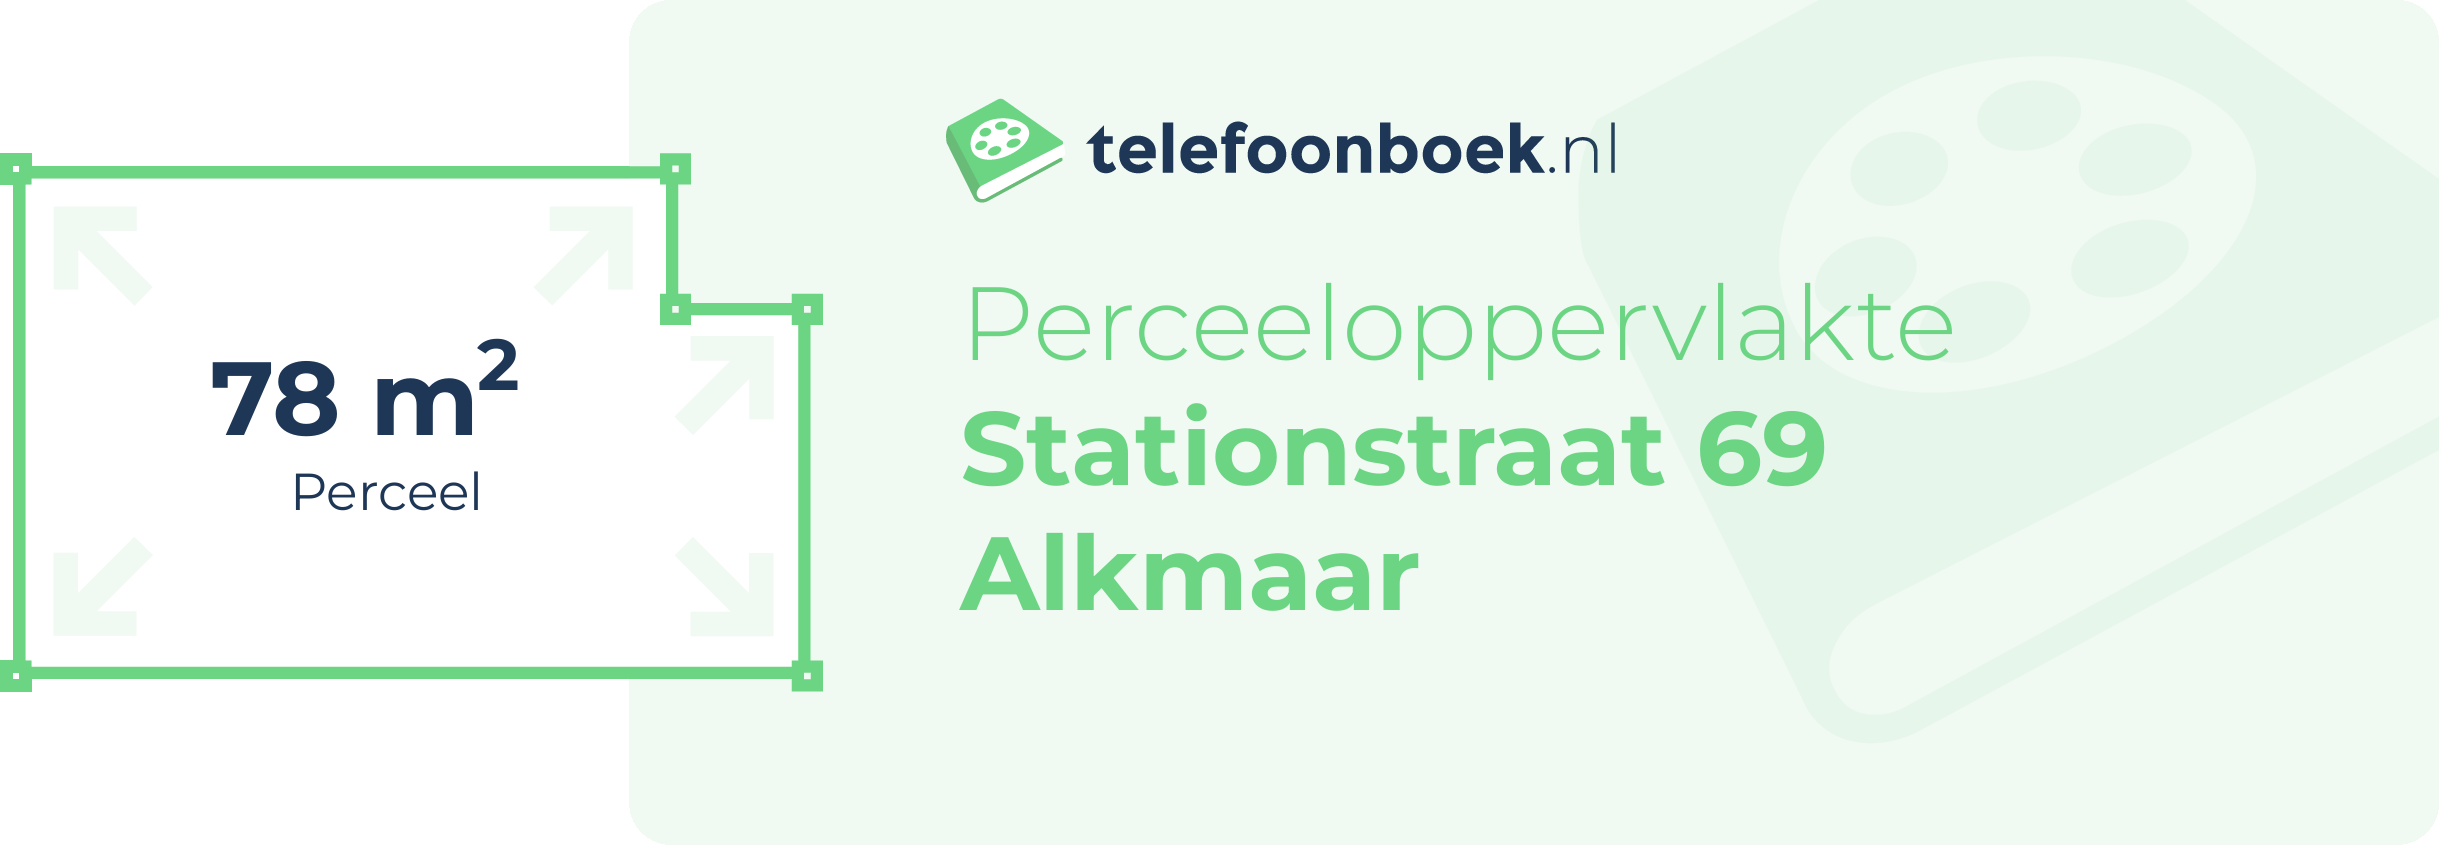 Perceeloppervlakte Stationstraat 69 Alkmaar